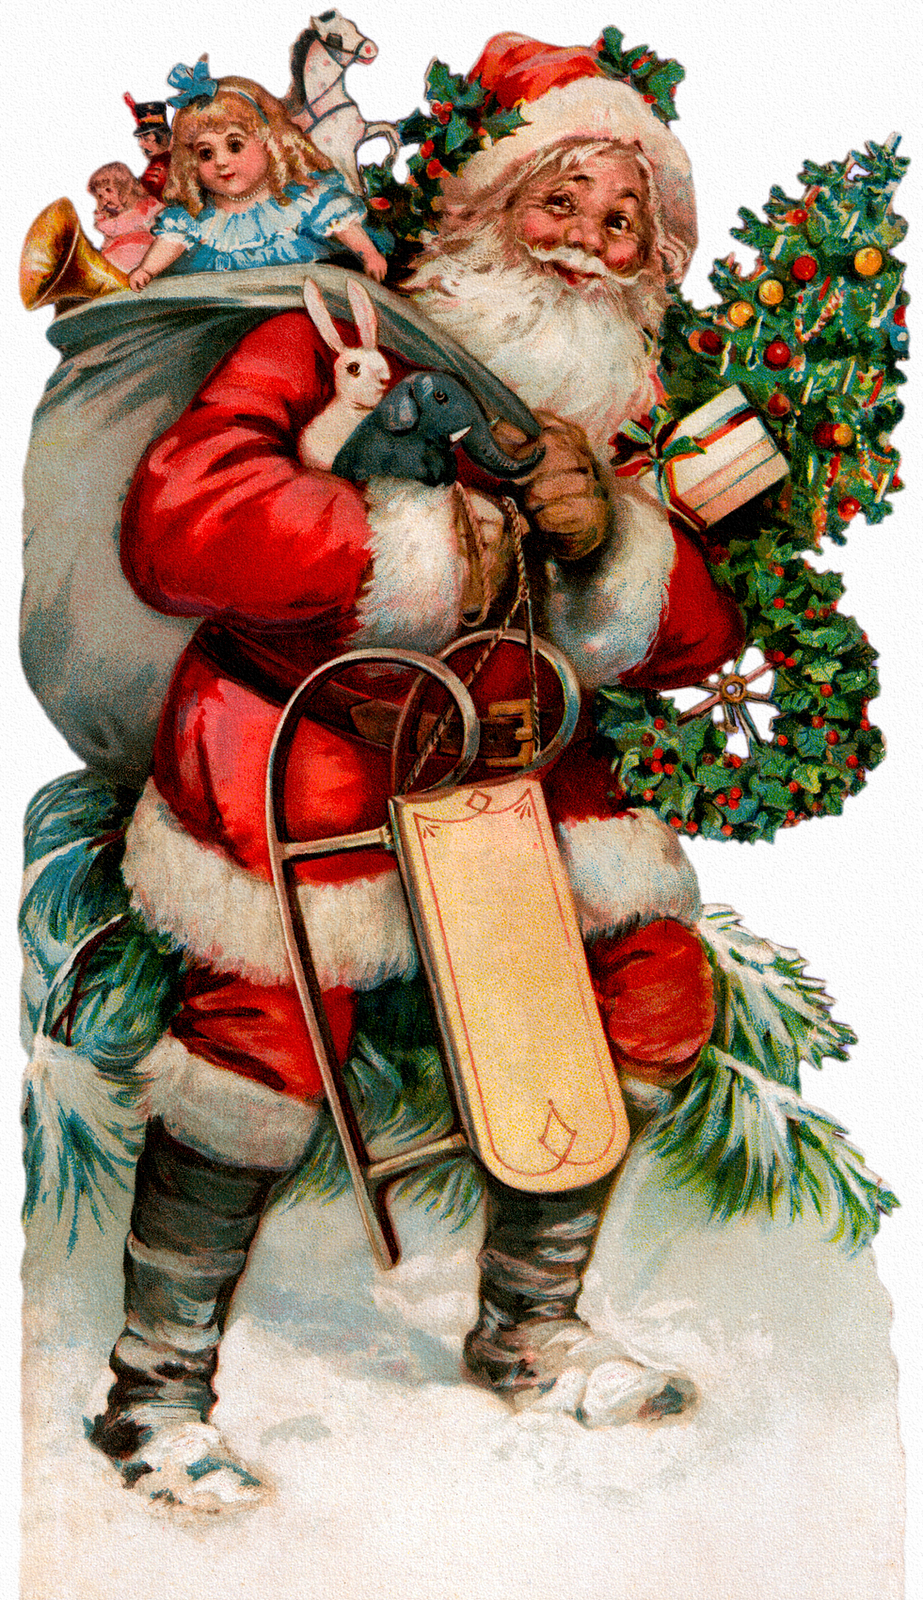 Vintage Santa Claus Cards And A Holiday Wallpaper